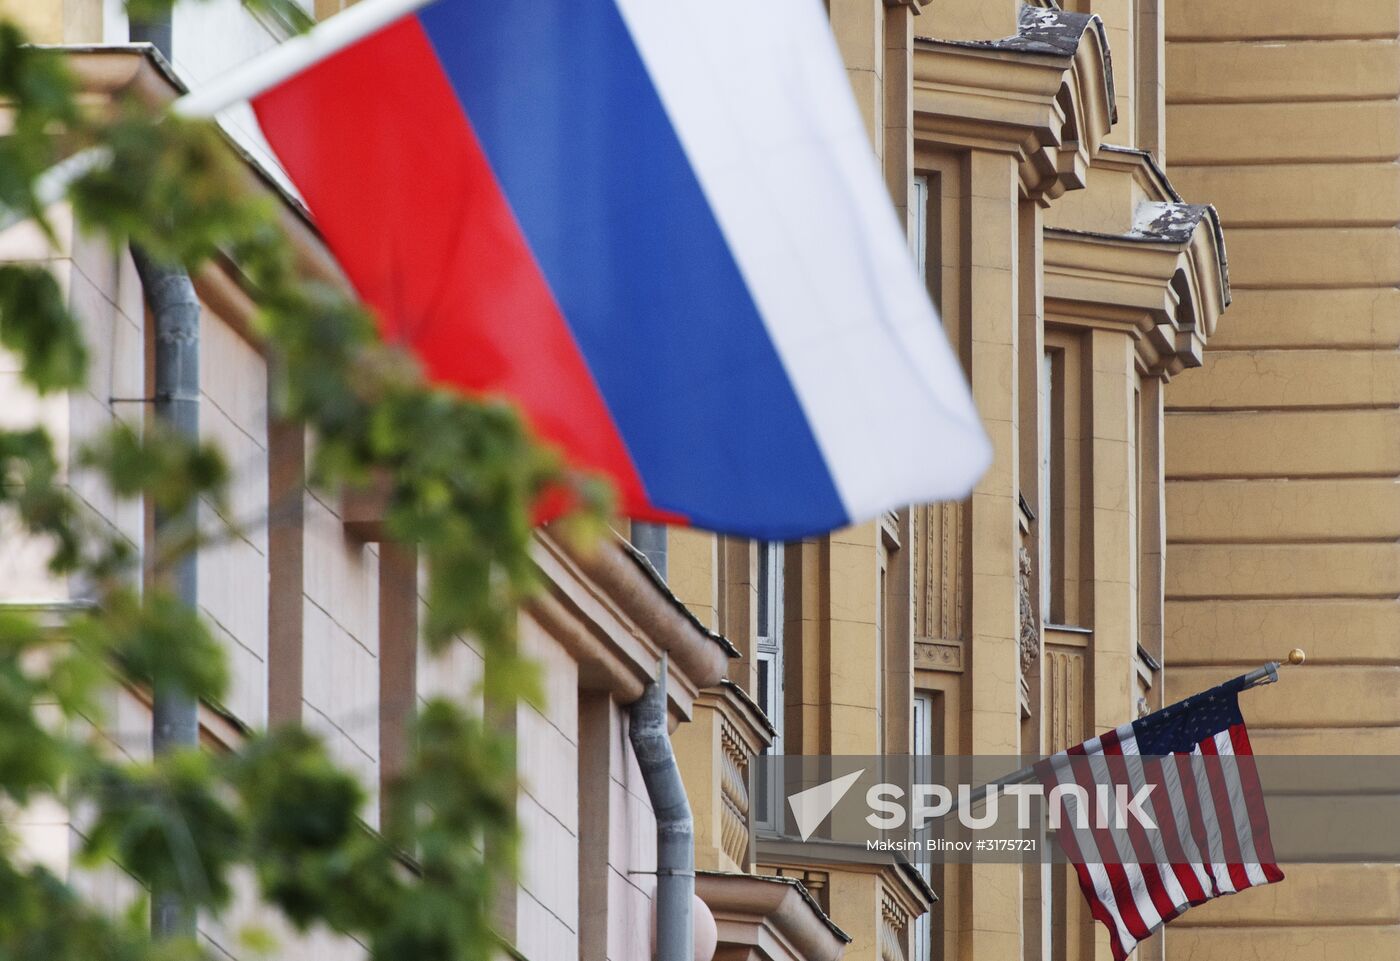 USA suspends issuing nonimmigrant visas in Russia